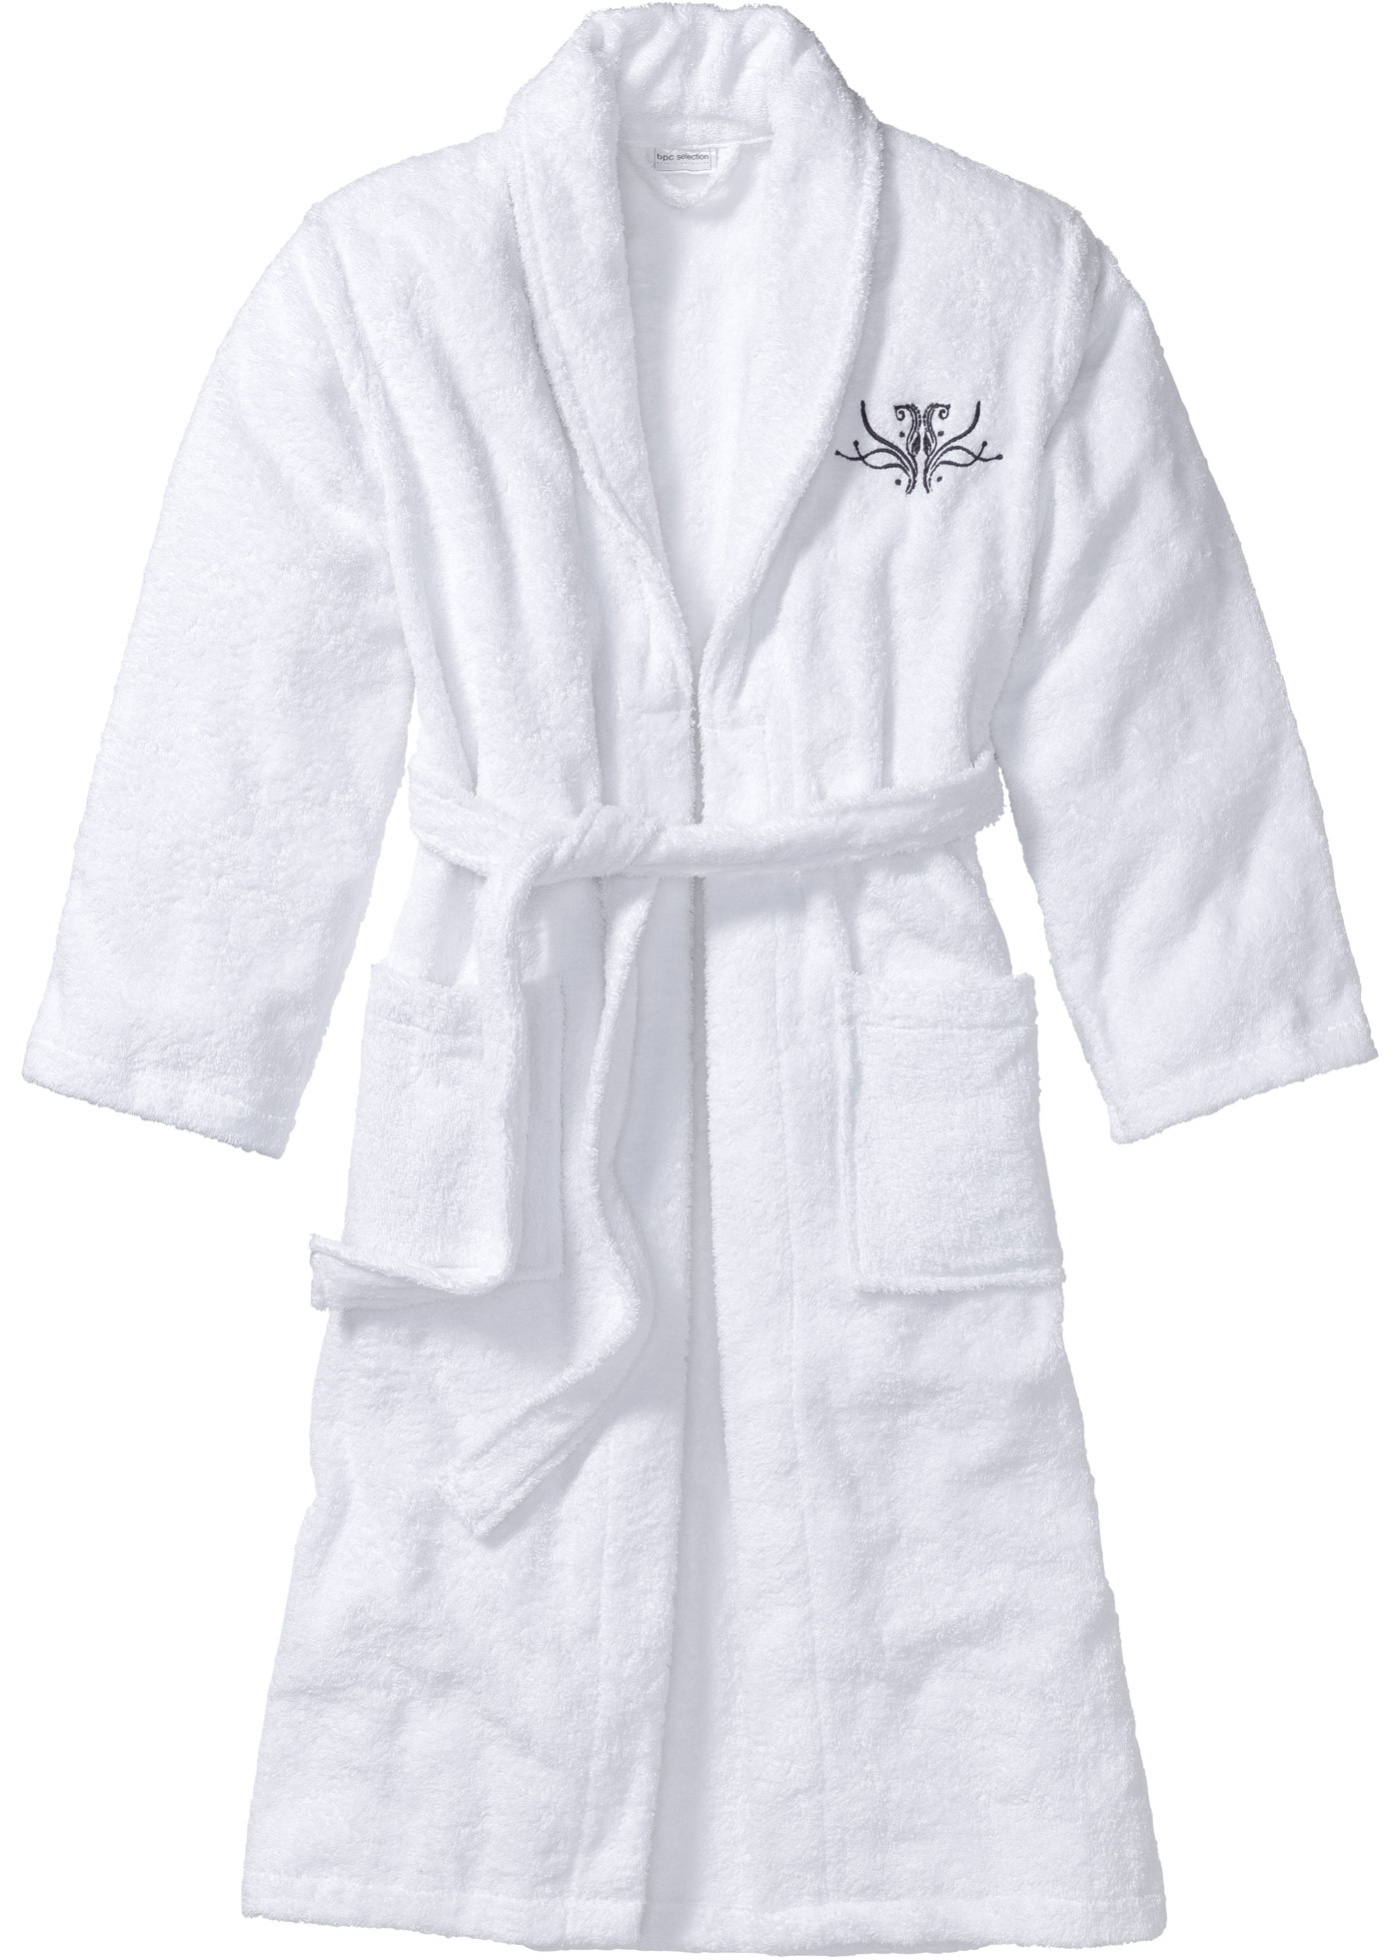 Купить халаты от производителя. Huber Tricot халат. Махровый халат. Банный халат. Белый махровый халат.